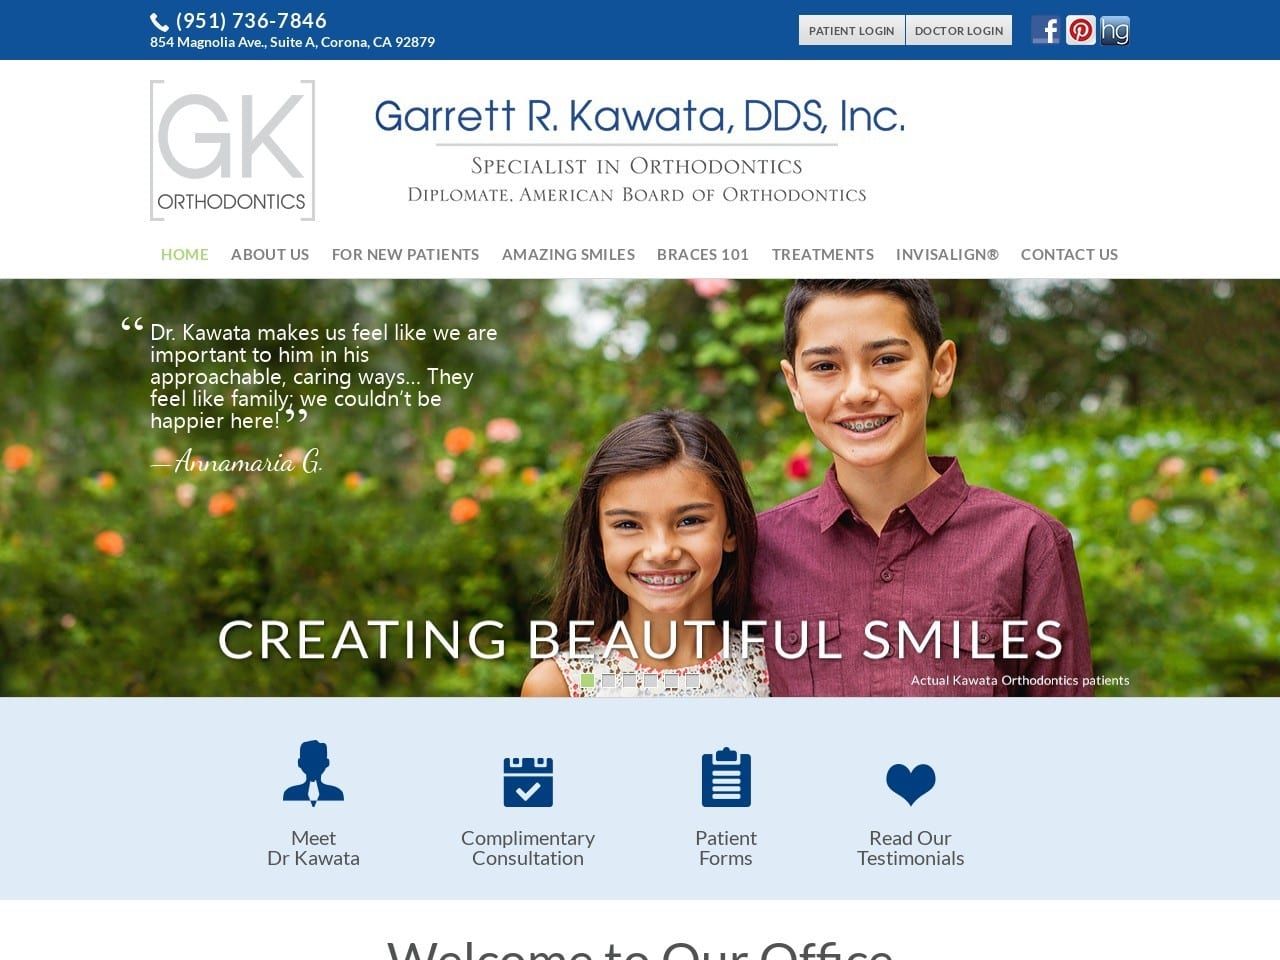 Km Orthodontics Website Screenshot from kmorthodontics.com